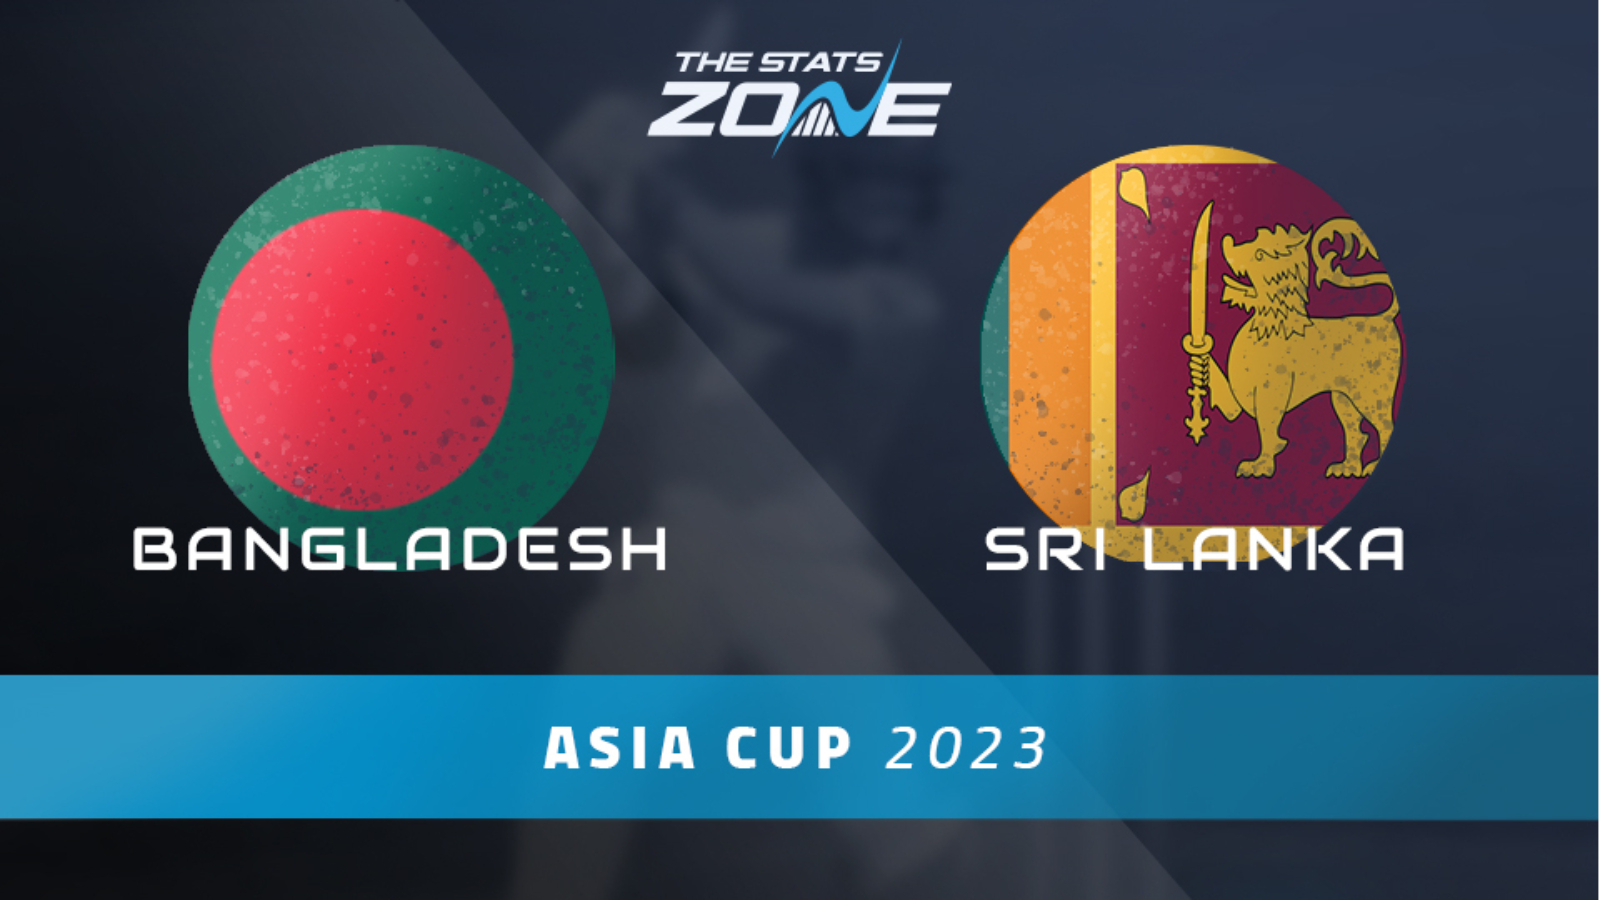 Bangladesh vs Sri Lanka Group Stage Preview & Prediction 2023